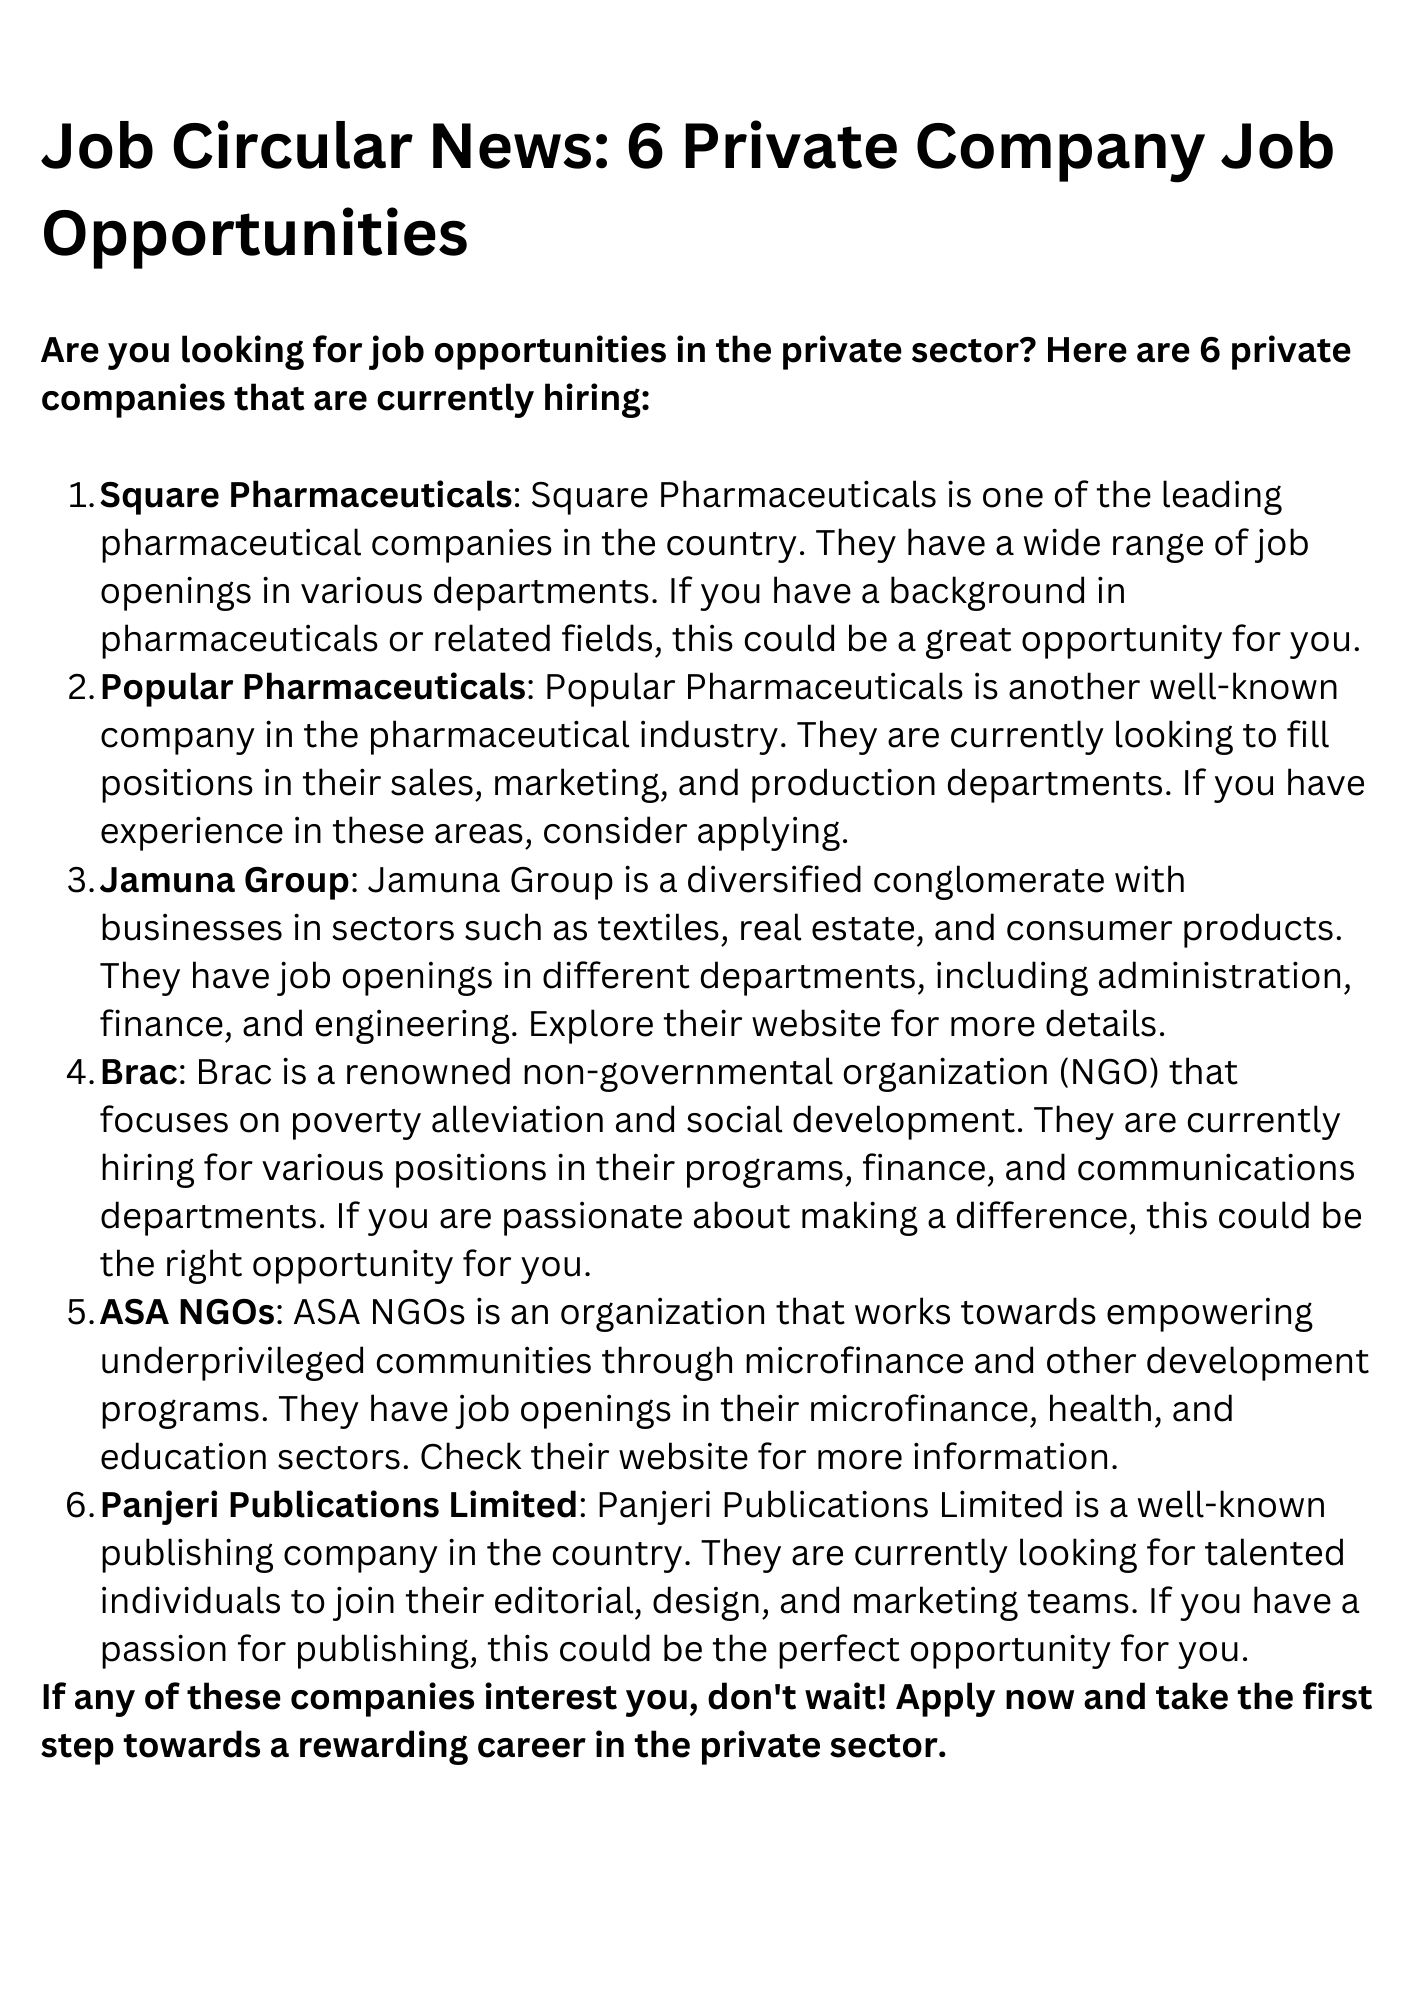 Job Circular News: 6 Private Company Job Opportunities